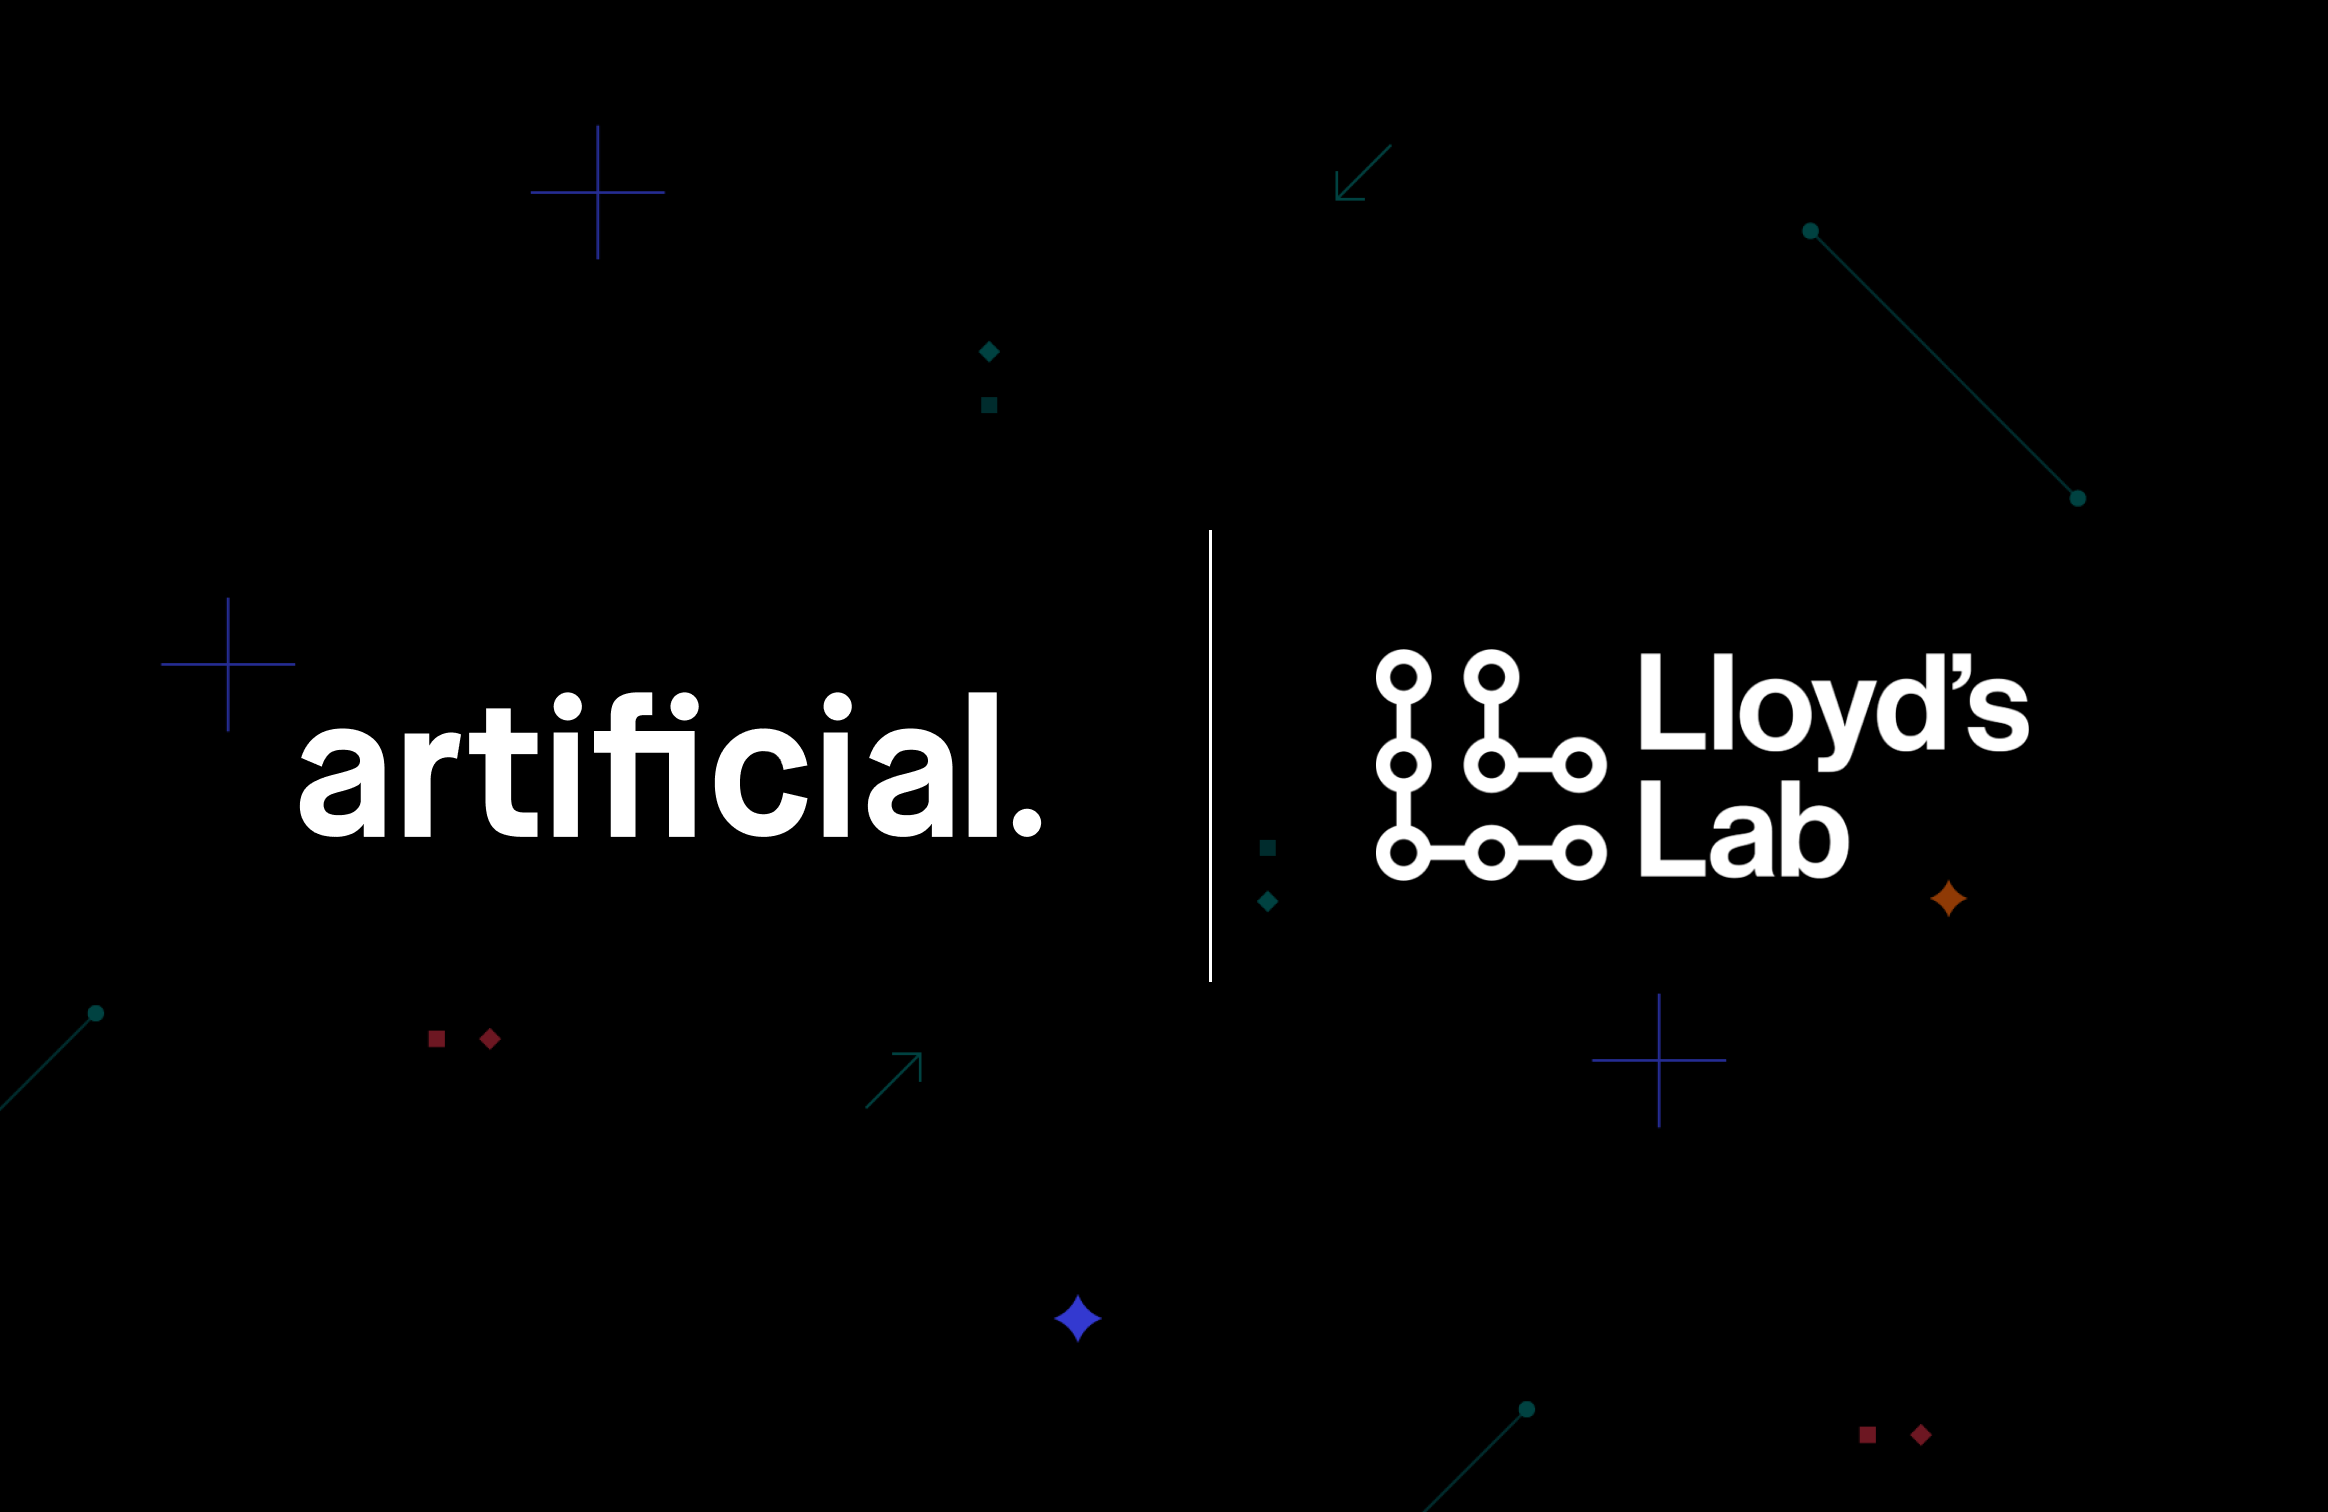 lloyds-lab-artificial-acceptance